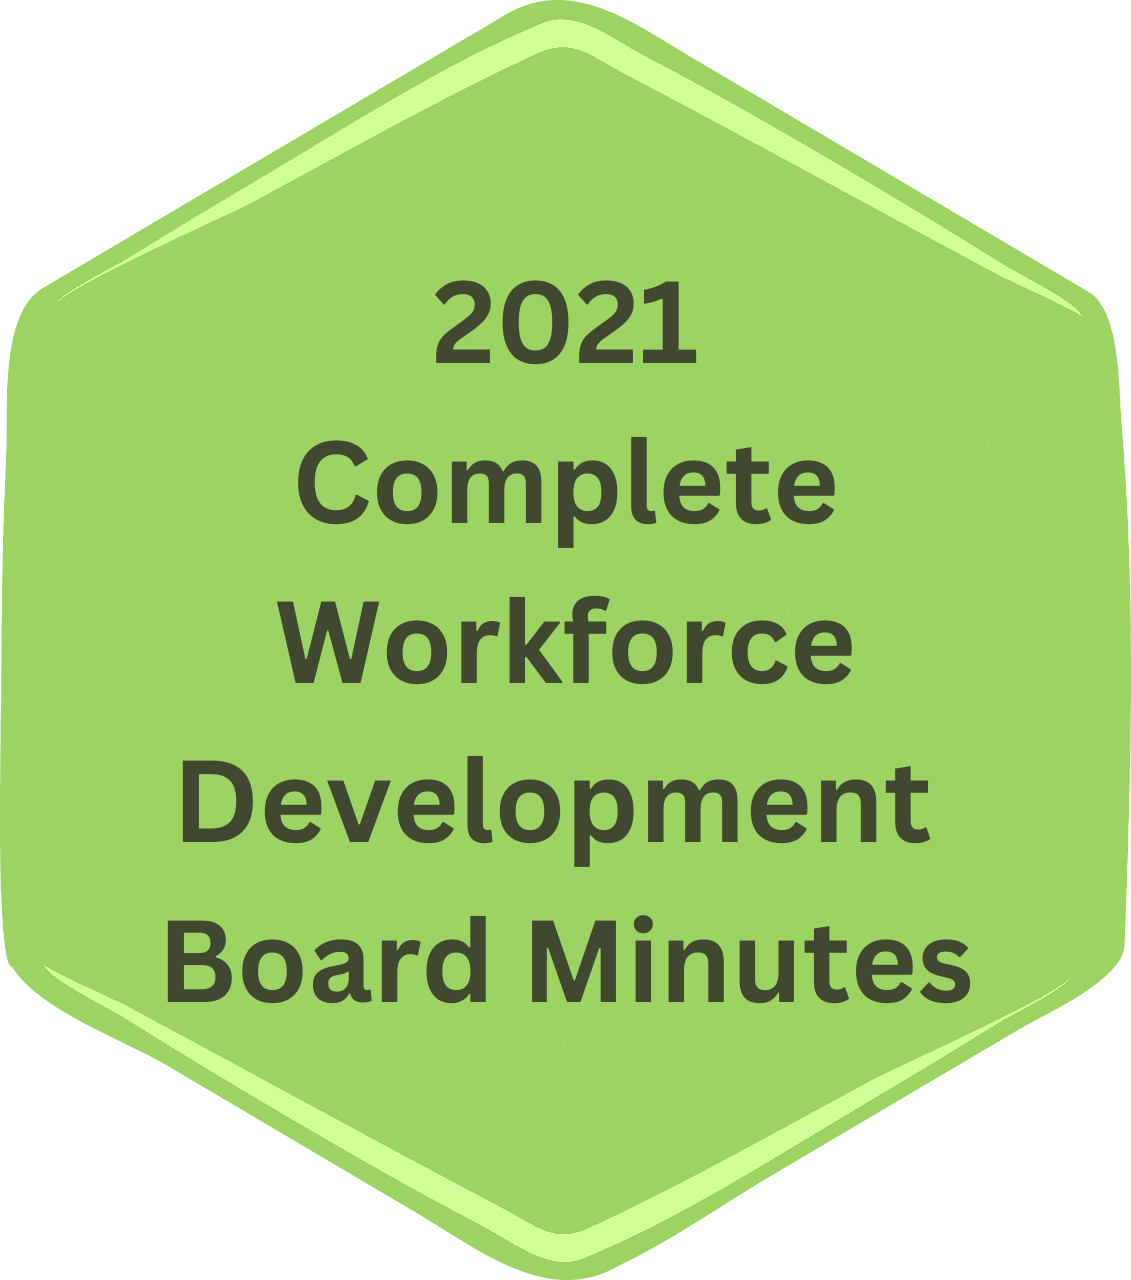 workforce development board meeting minutes complete 2021